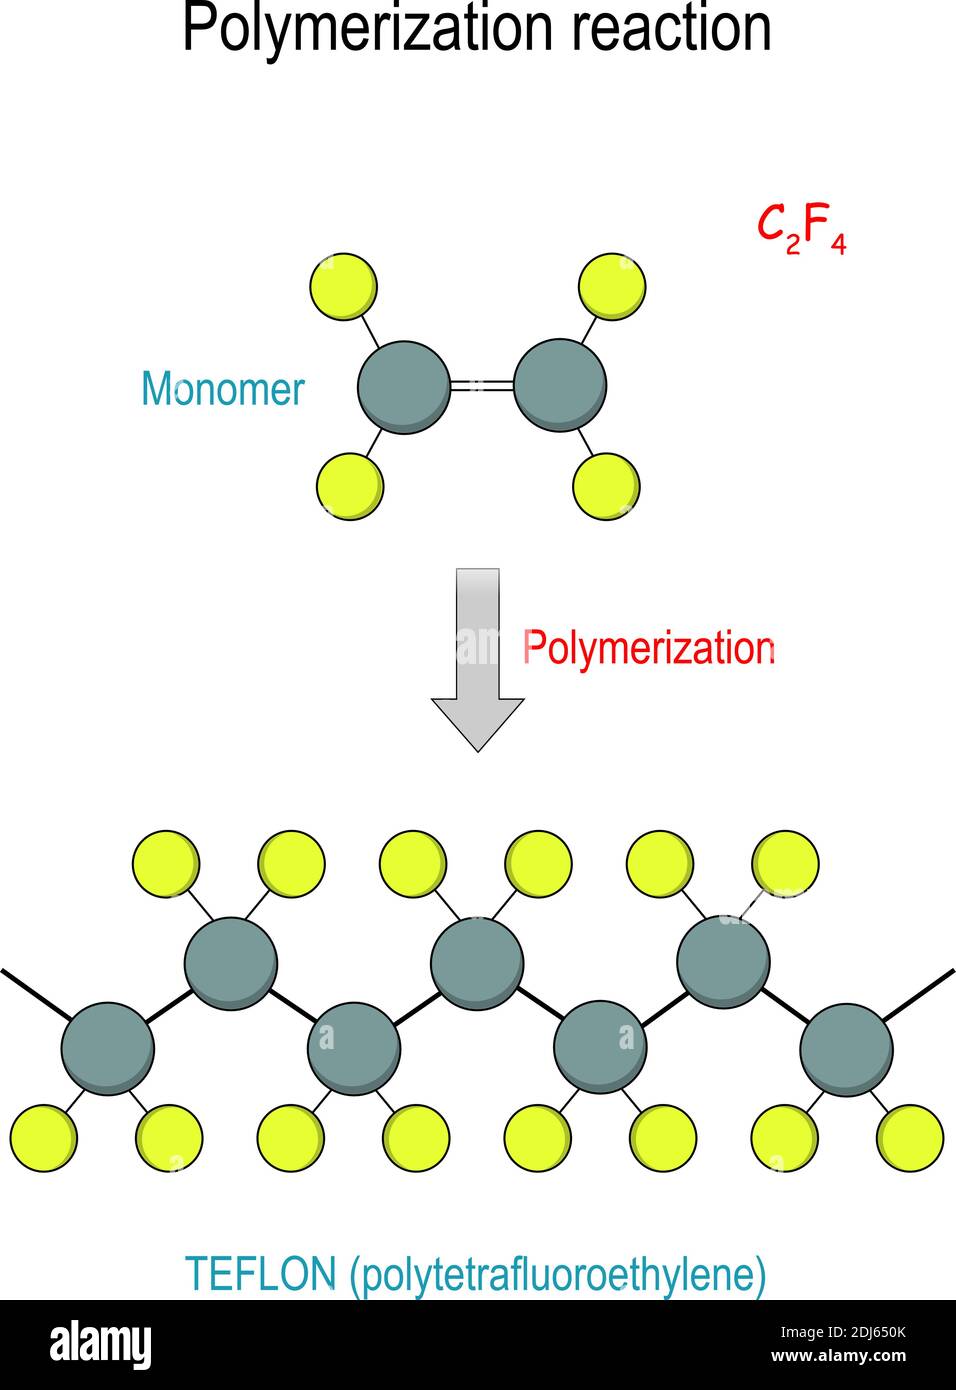 Teflon molecule. Chemical reaction of polymerization. Polytetrafluoroethylene. structural formula and model of molecule. C2F4. Vector diagram Stock Vector